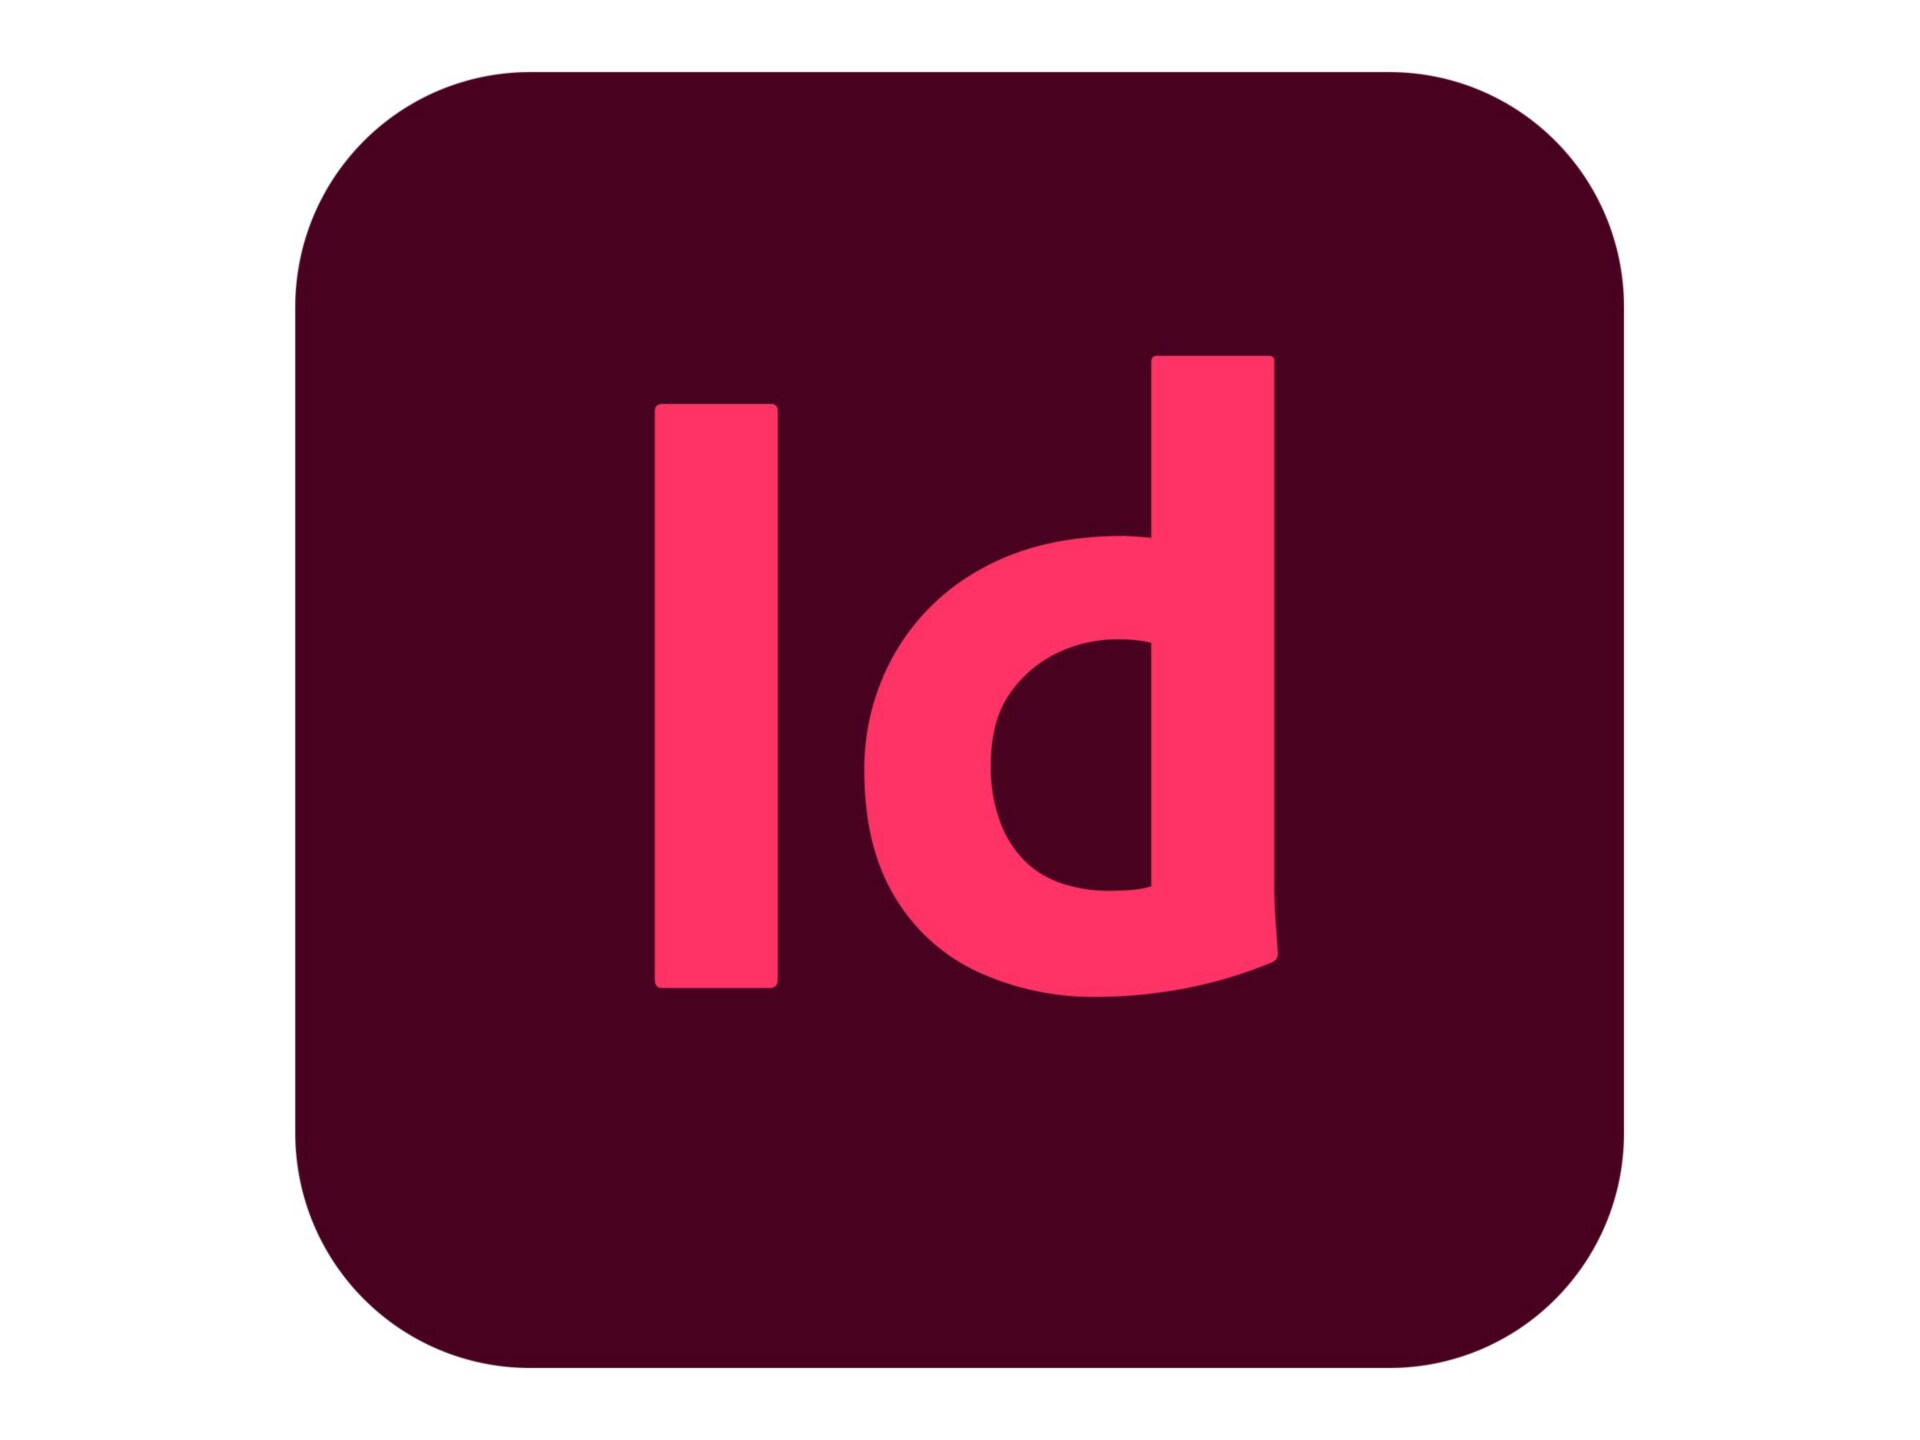 Adobe InDesign CC for Enterprise - Subscription New (4 months) - 1 named user